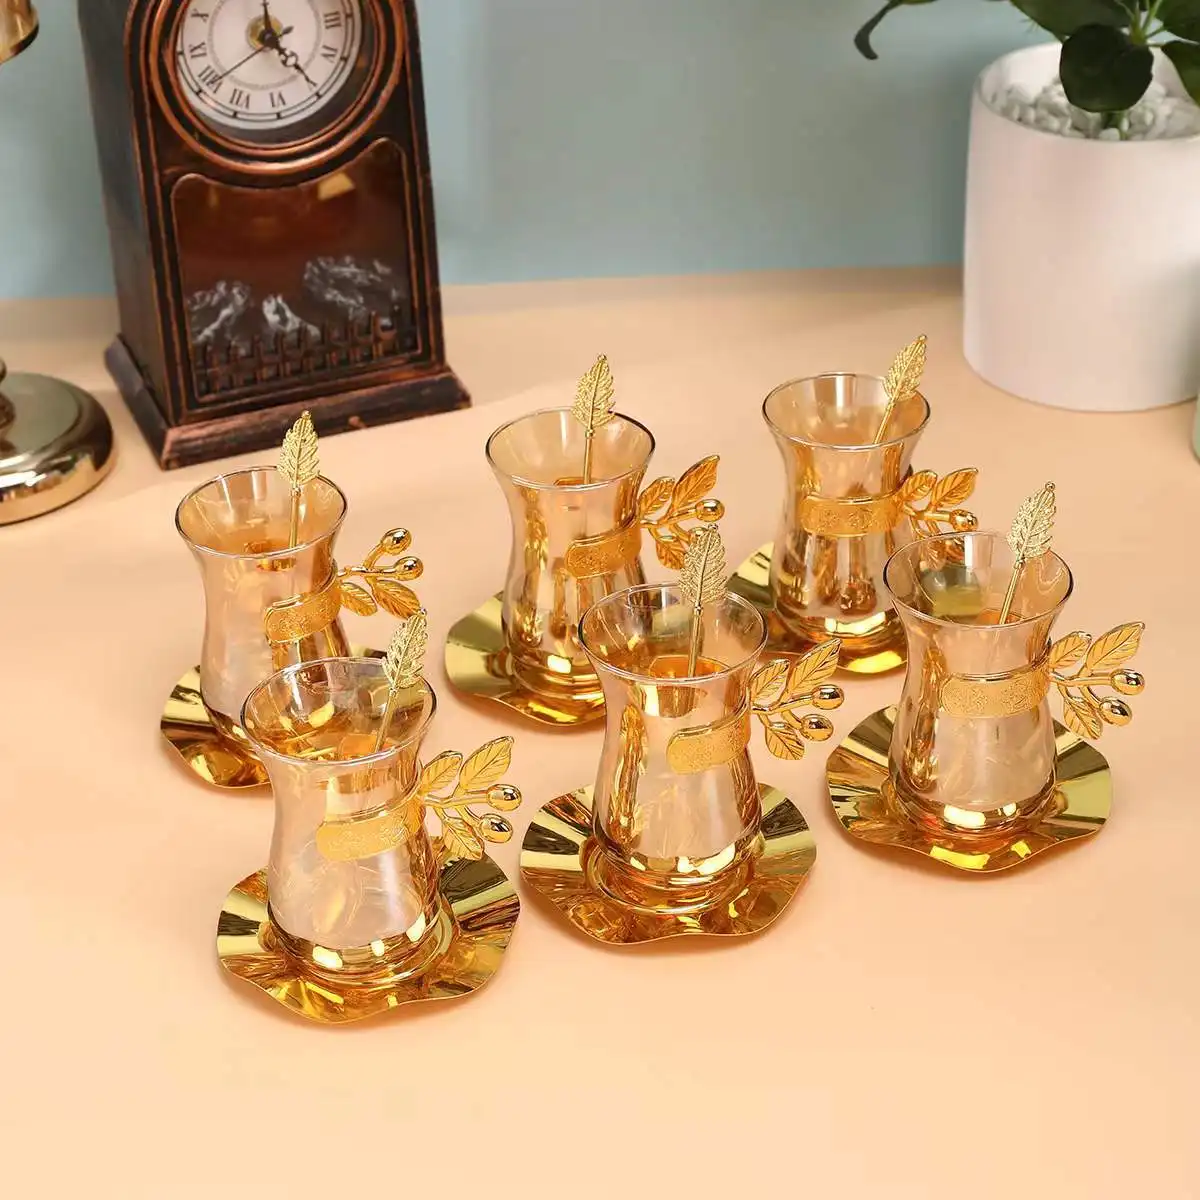 QIAN HU Light Luxury Arabic Turkish Espresso Waist Coffee Glass Cup and Saucer Tea Set Gold Metal Decoration